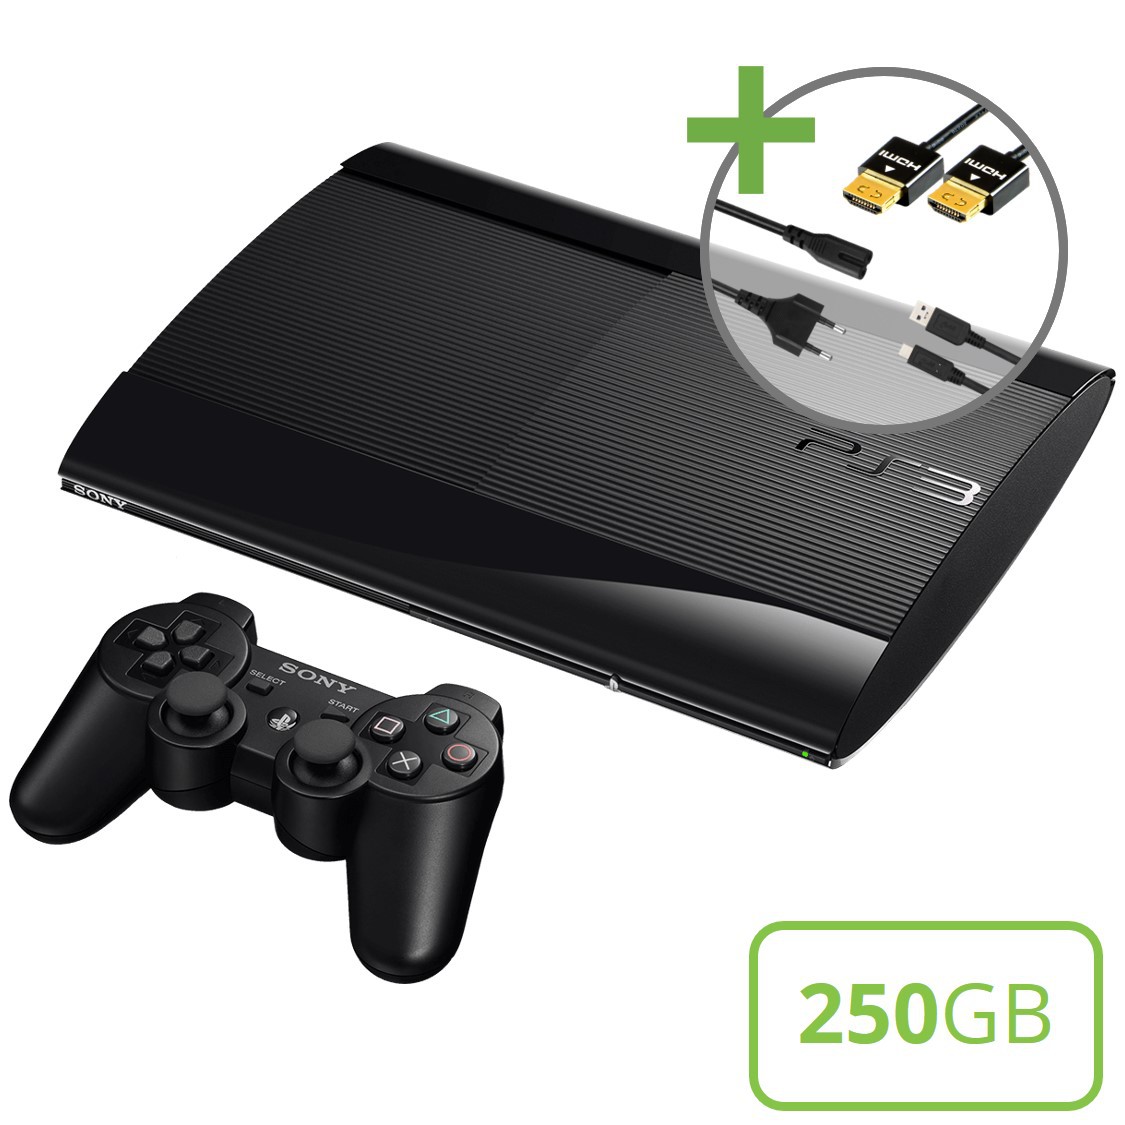 Sony PlayStation 3 Super Slim (250GB) Starter Pack - DualShock Edition Kopen | Playstation 3 Hardware